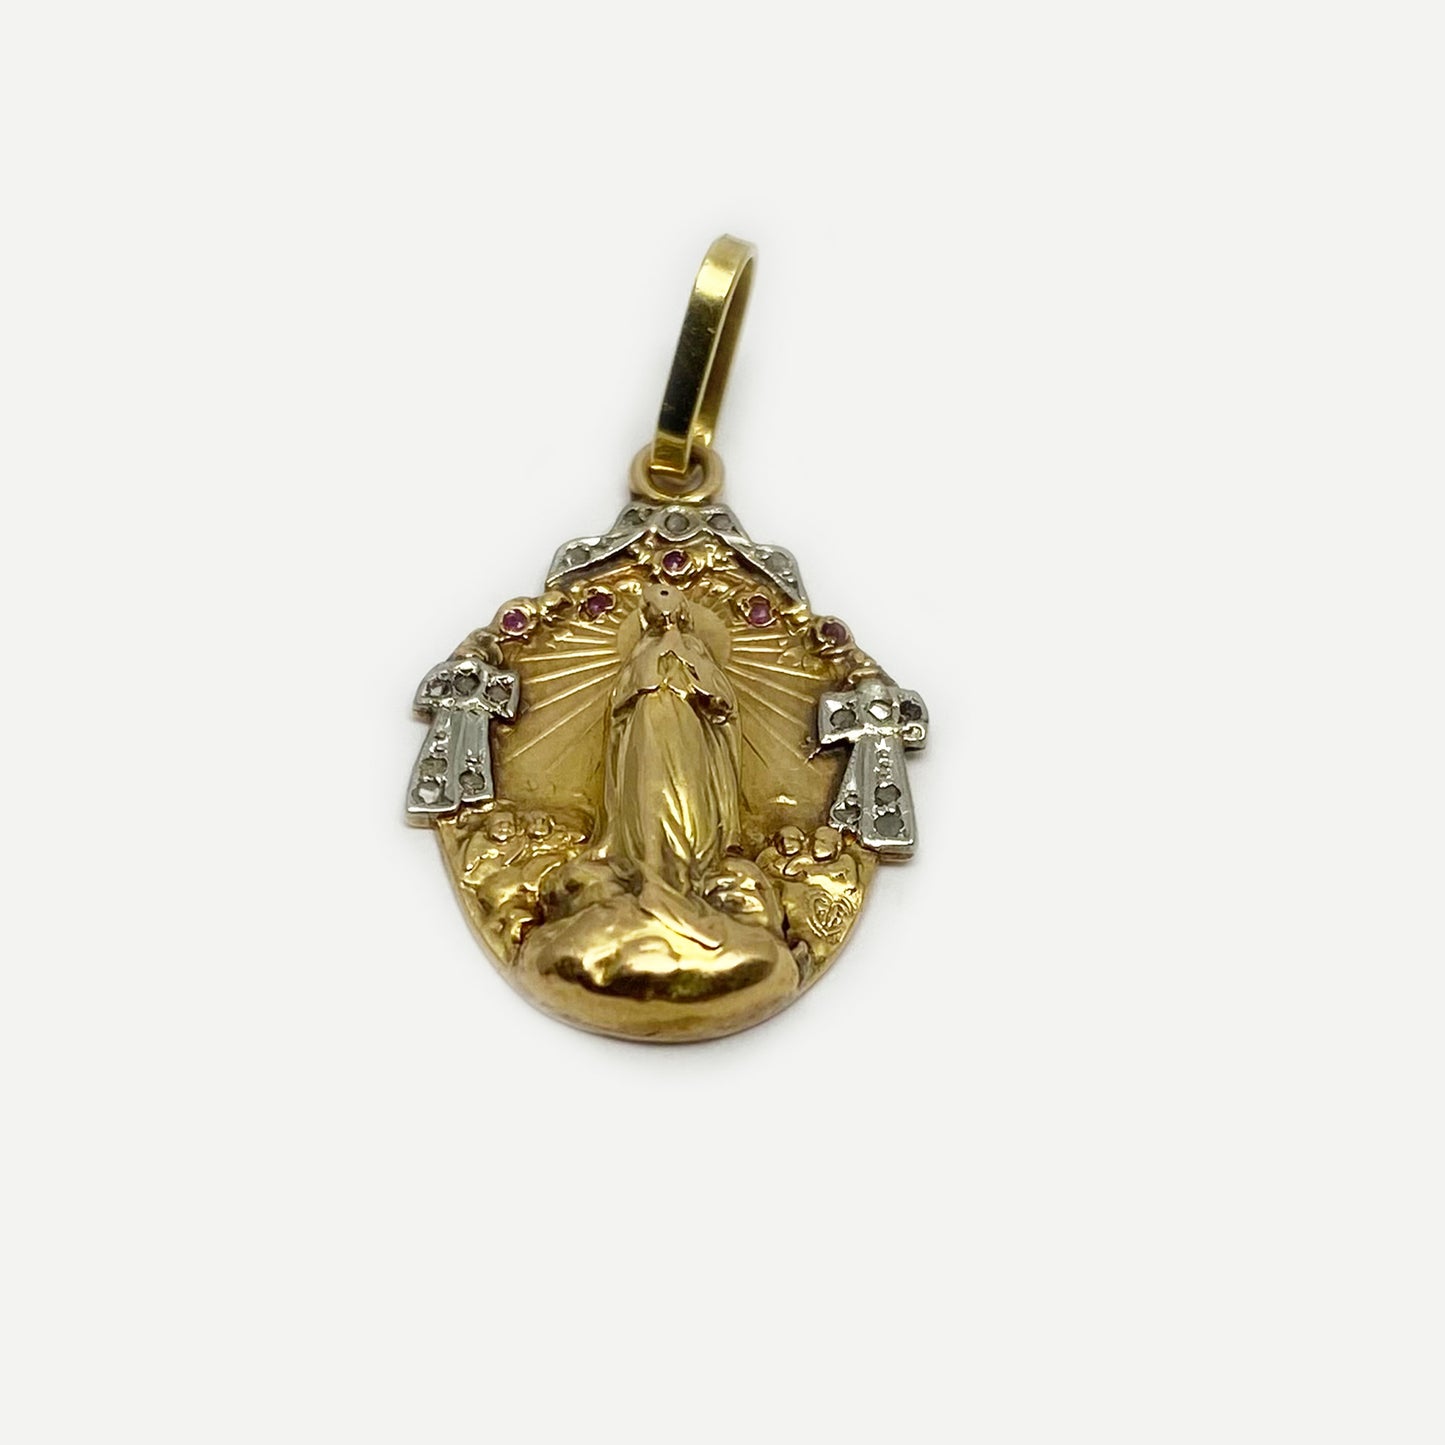 Antique 18k Gold Religious Medal, Art Nouveau, Our Lady Medal Pendant, 18 ct Gold, Portuguese Religious Medal, Catholic, Christian